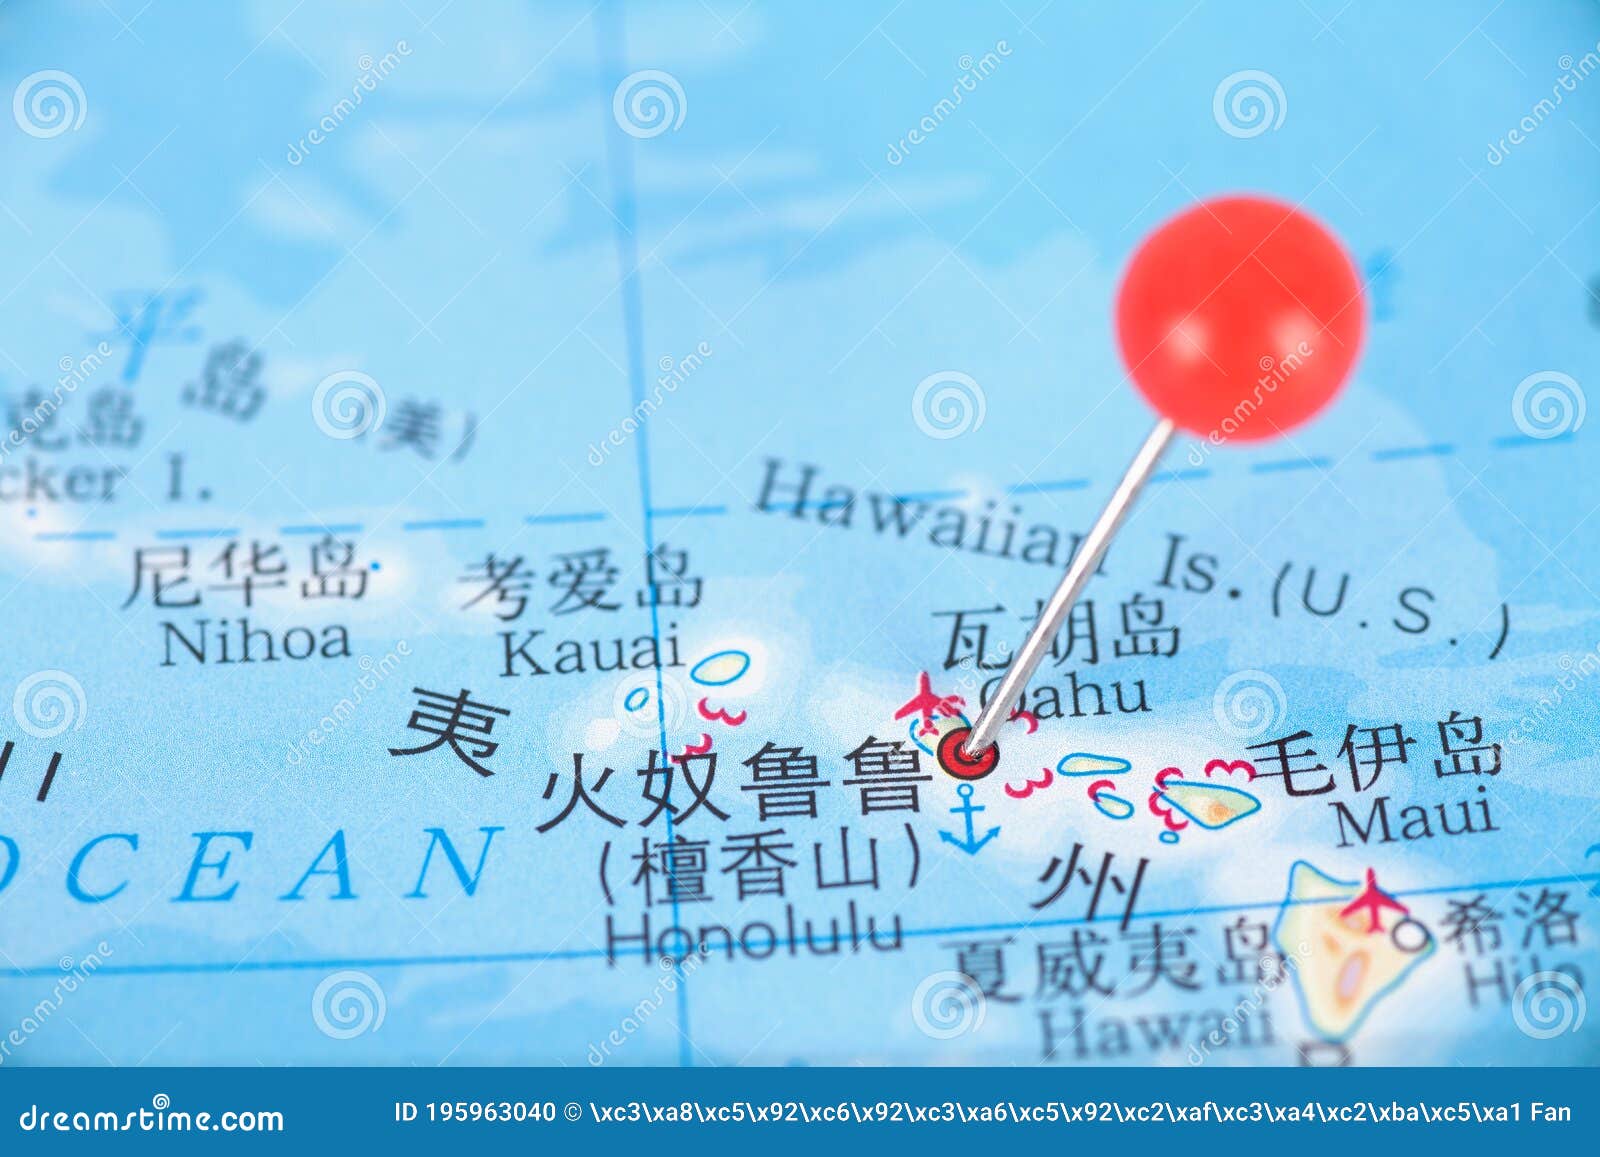 Location Honolulu Hawaii Usa Map 195963040 